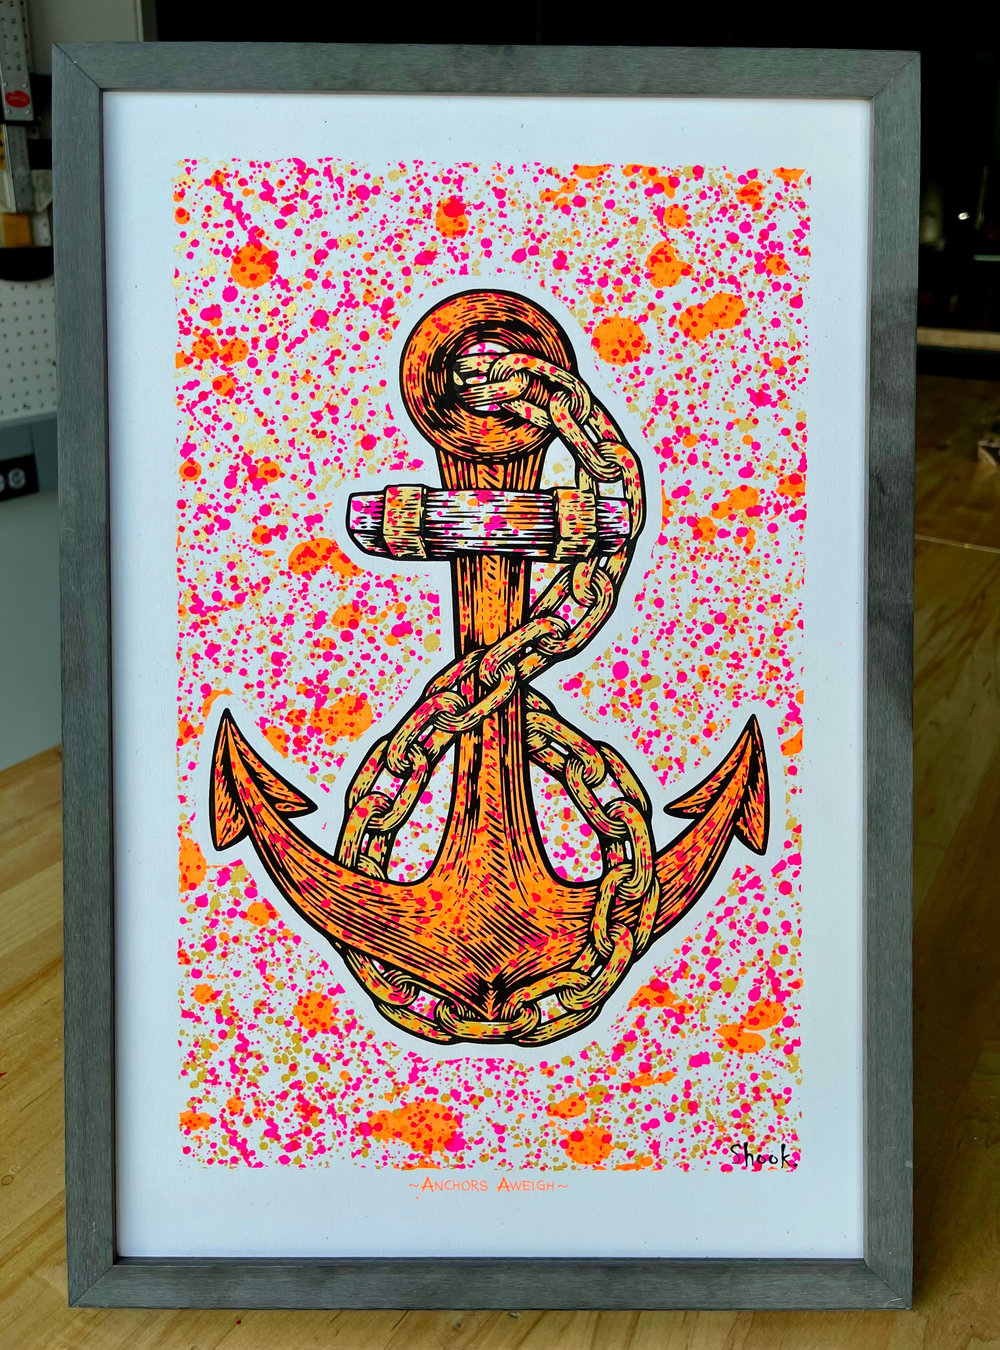 Anchors Aweigh! - Silk Screened Print